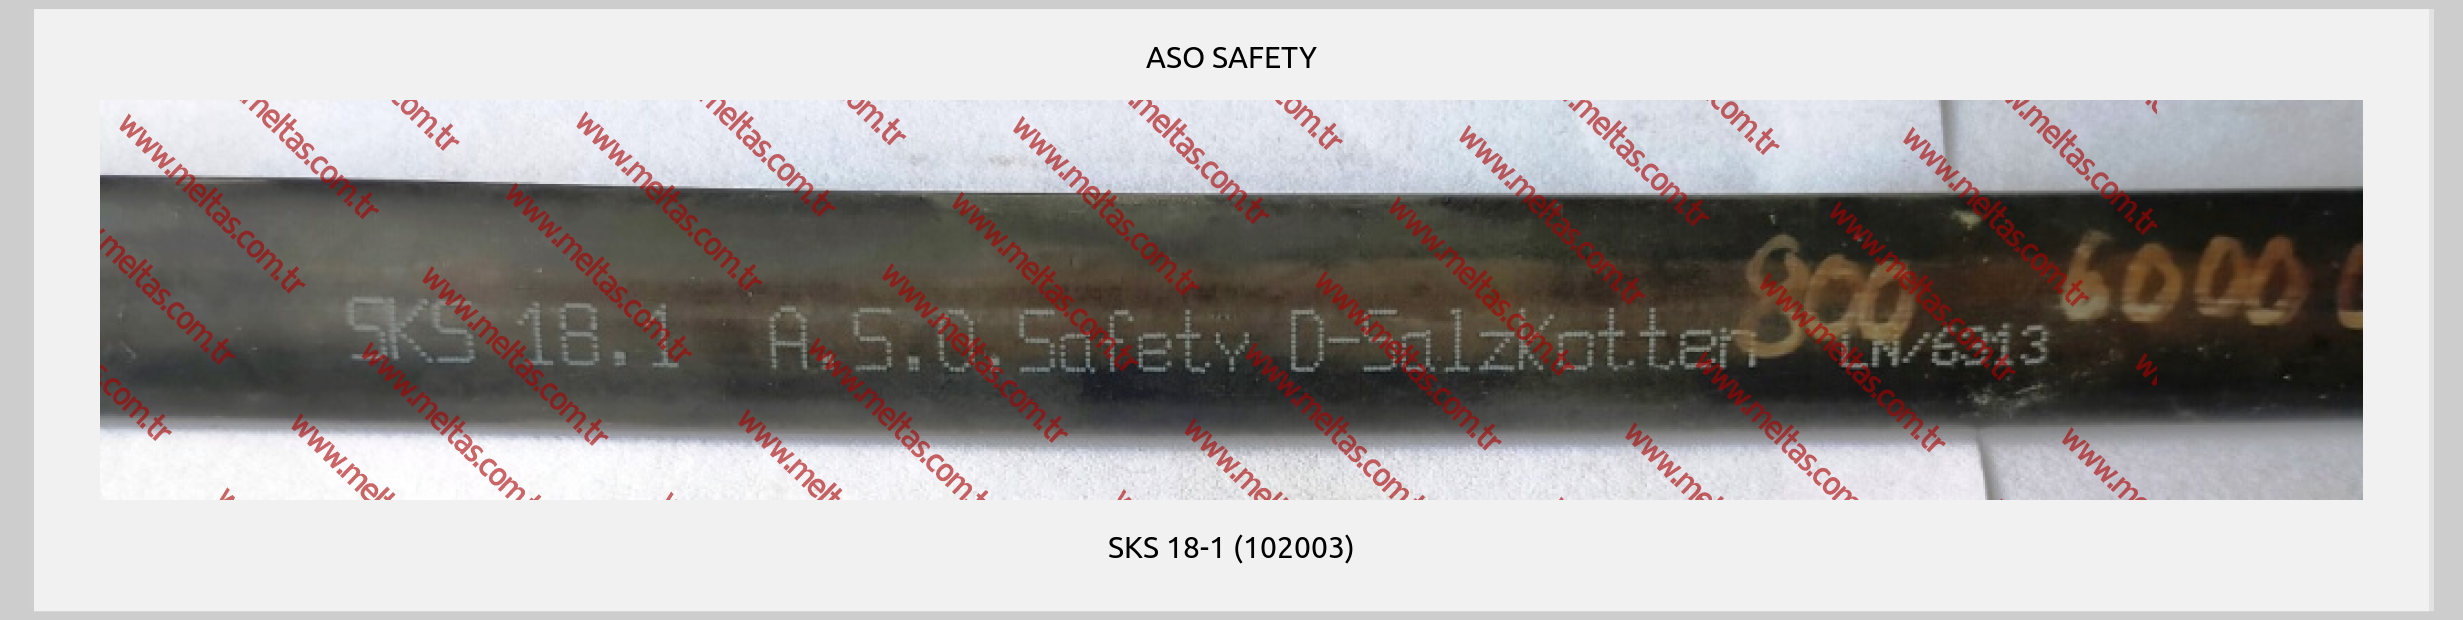 ASO SAFETY - SKS 18-1 (102003)